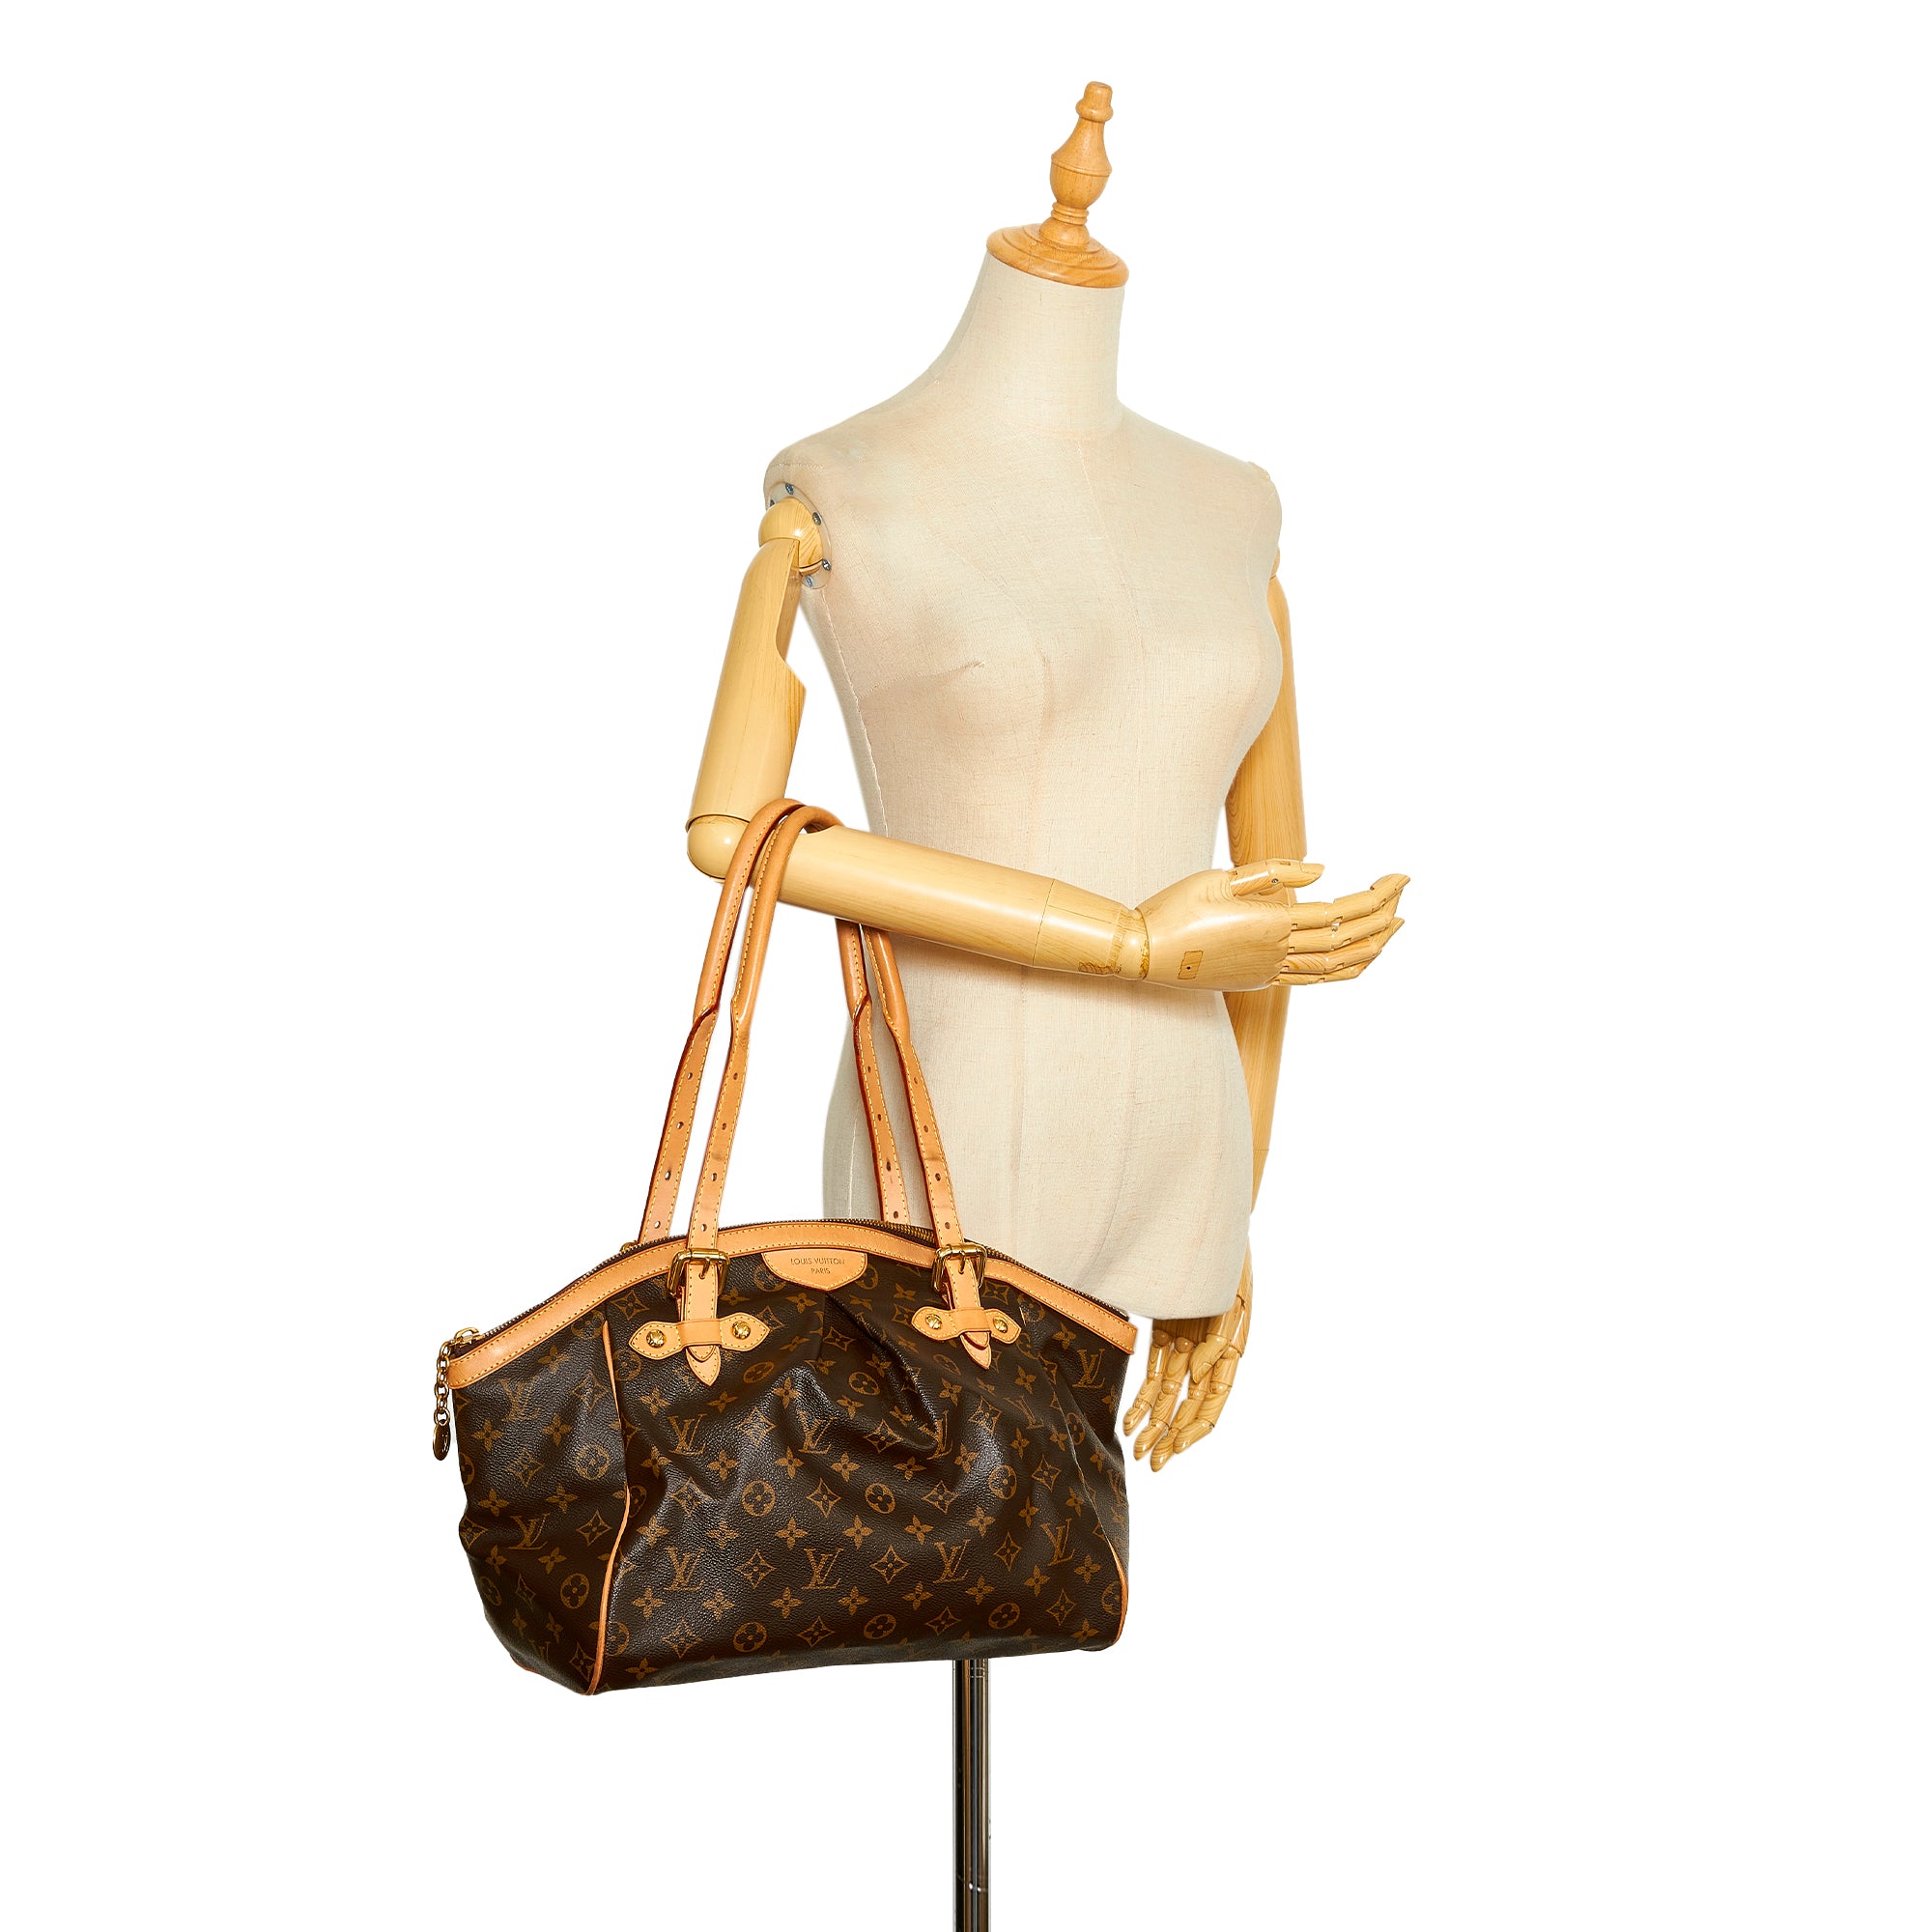 Louis Vuitton Tivoli GM Monogram Canvas Top Handle Bag on SALE